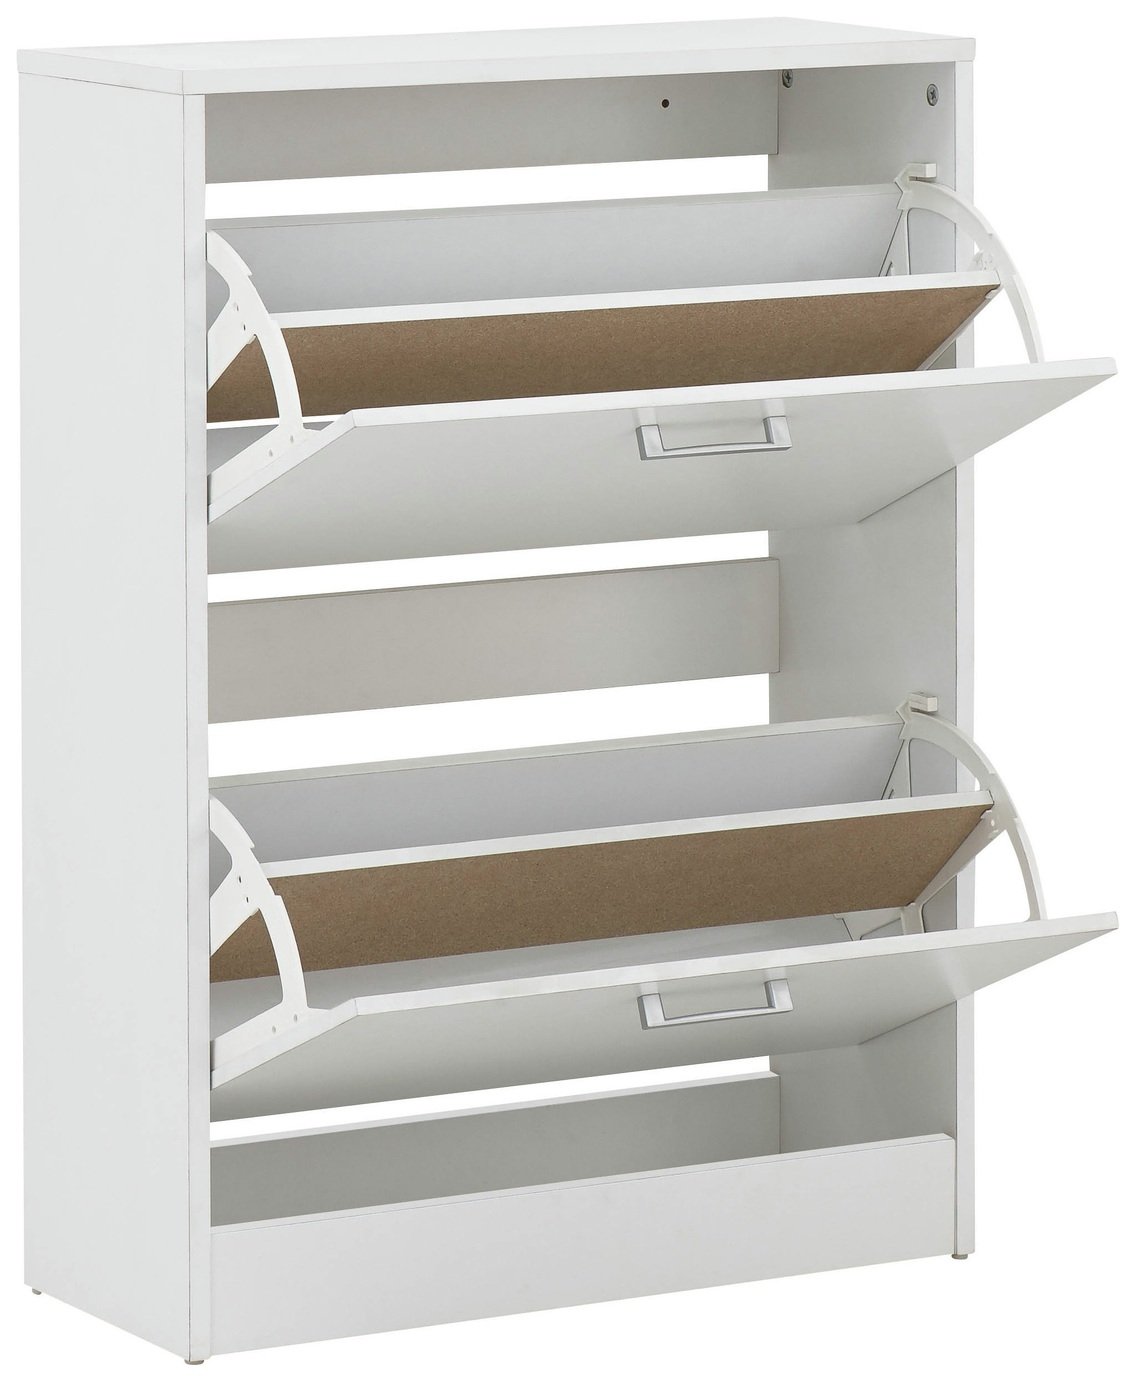 GFW Stirling Shoe Storage Cabinet- White